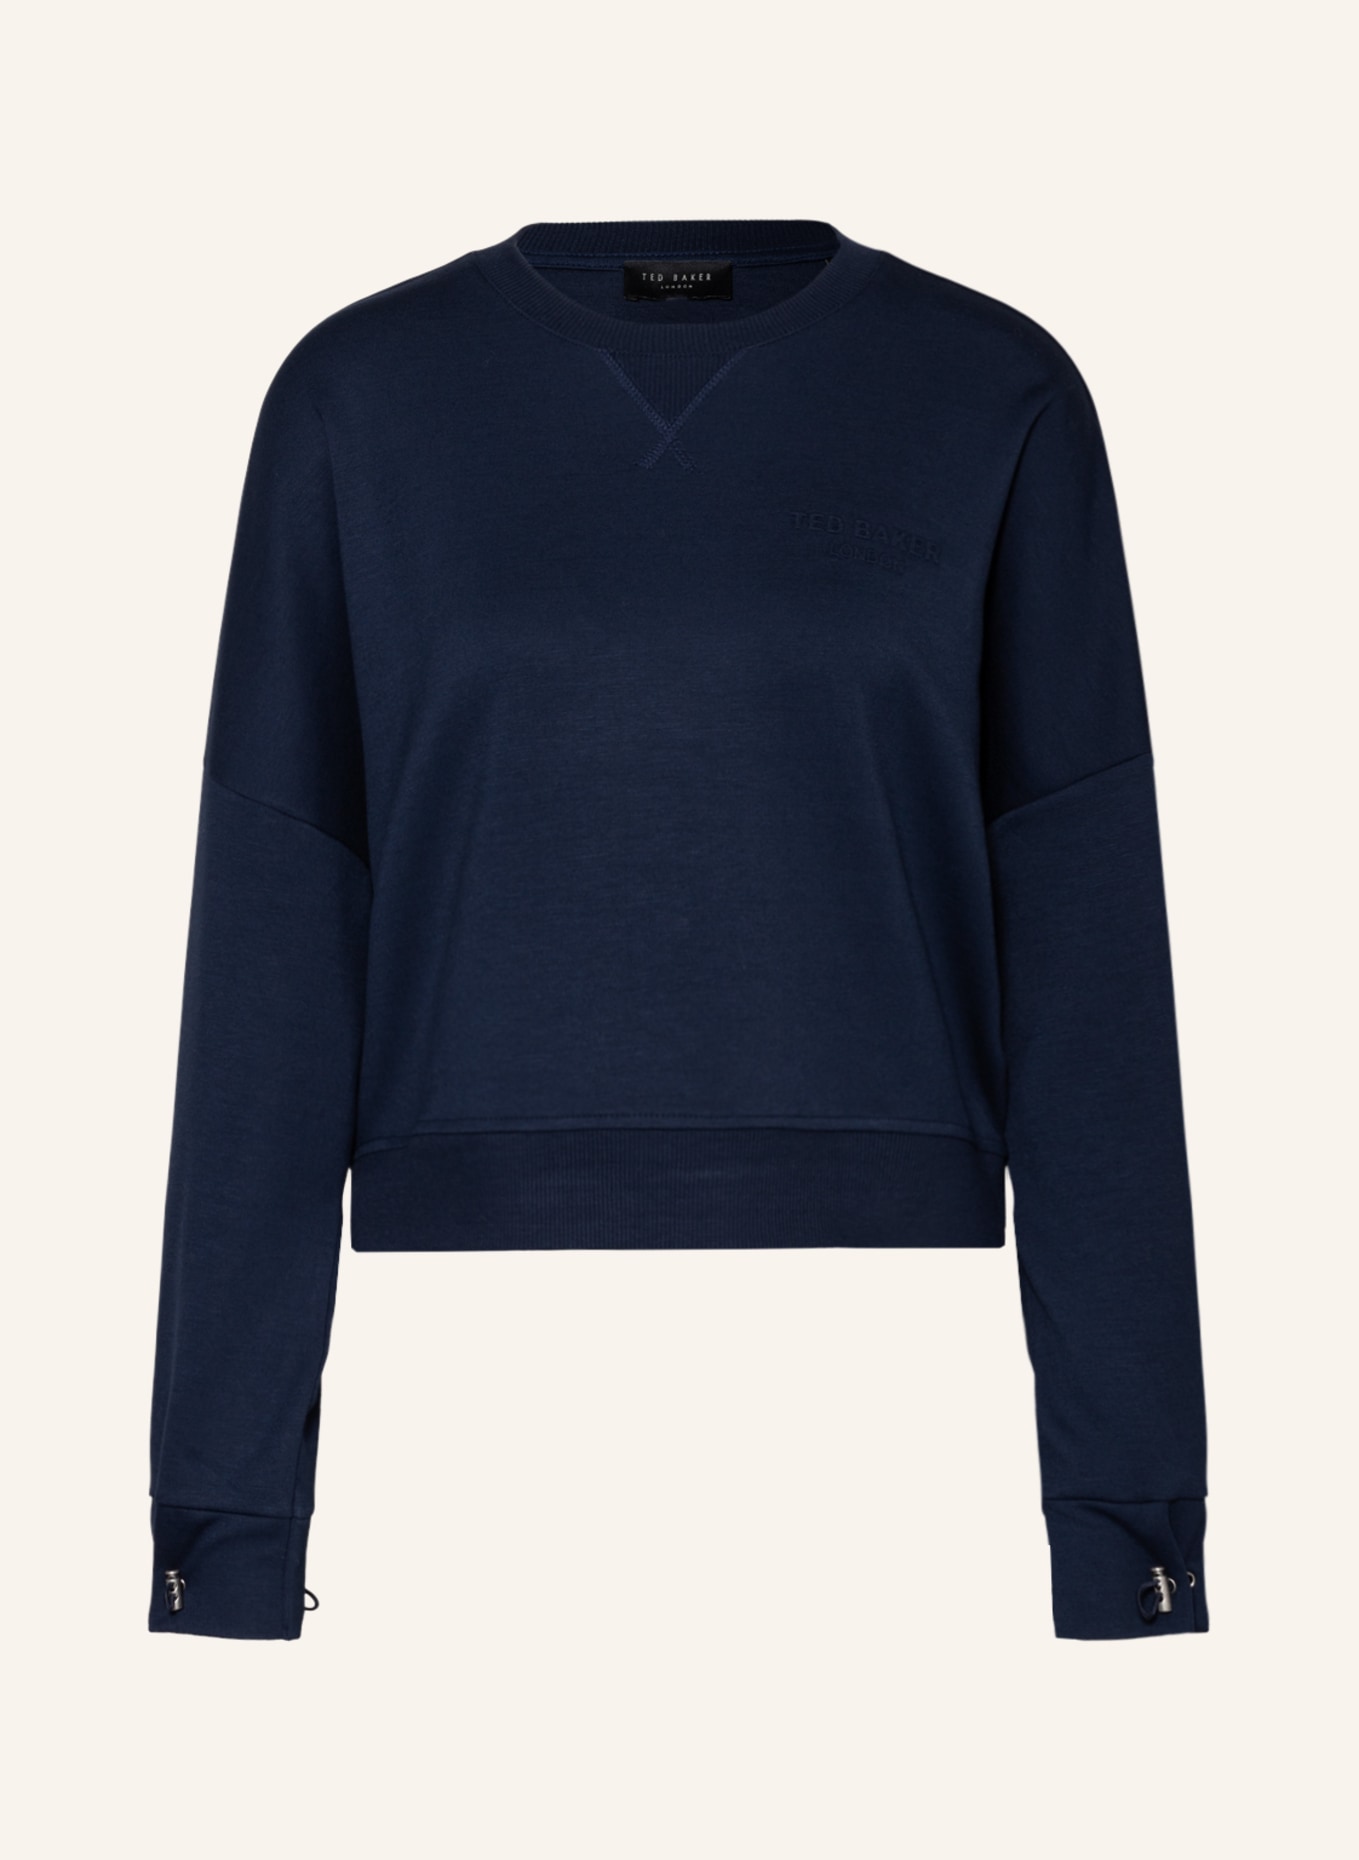 TED BAKER Sweatshirt ORIETTA , Farbe: DUNKELBLAU (Bild 1)